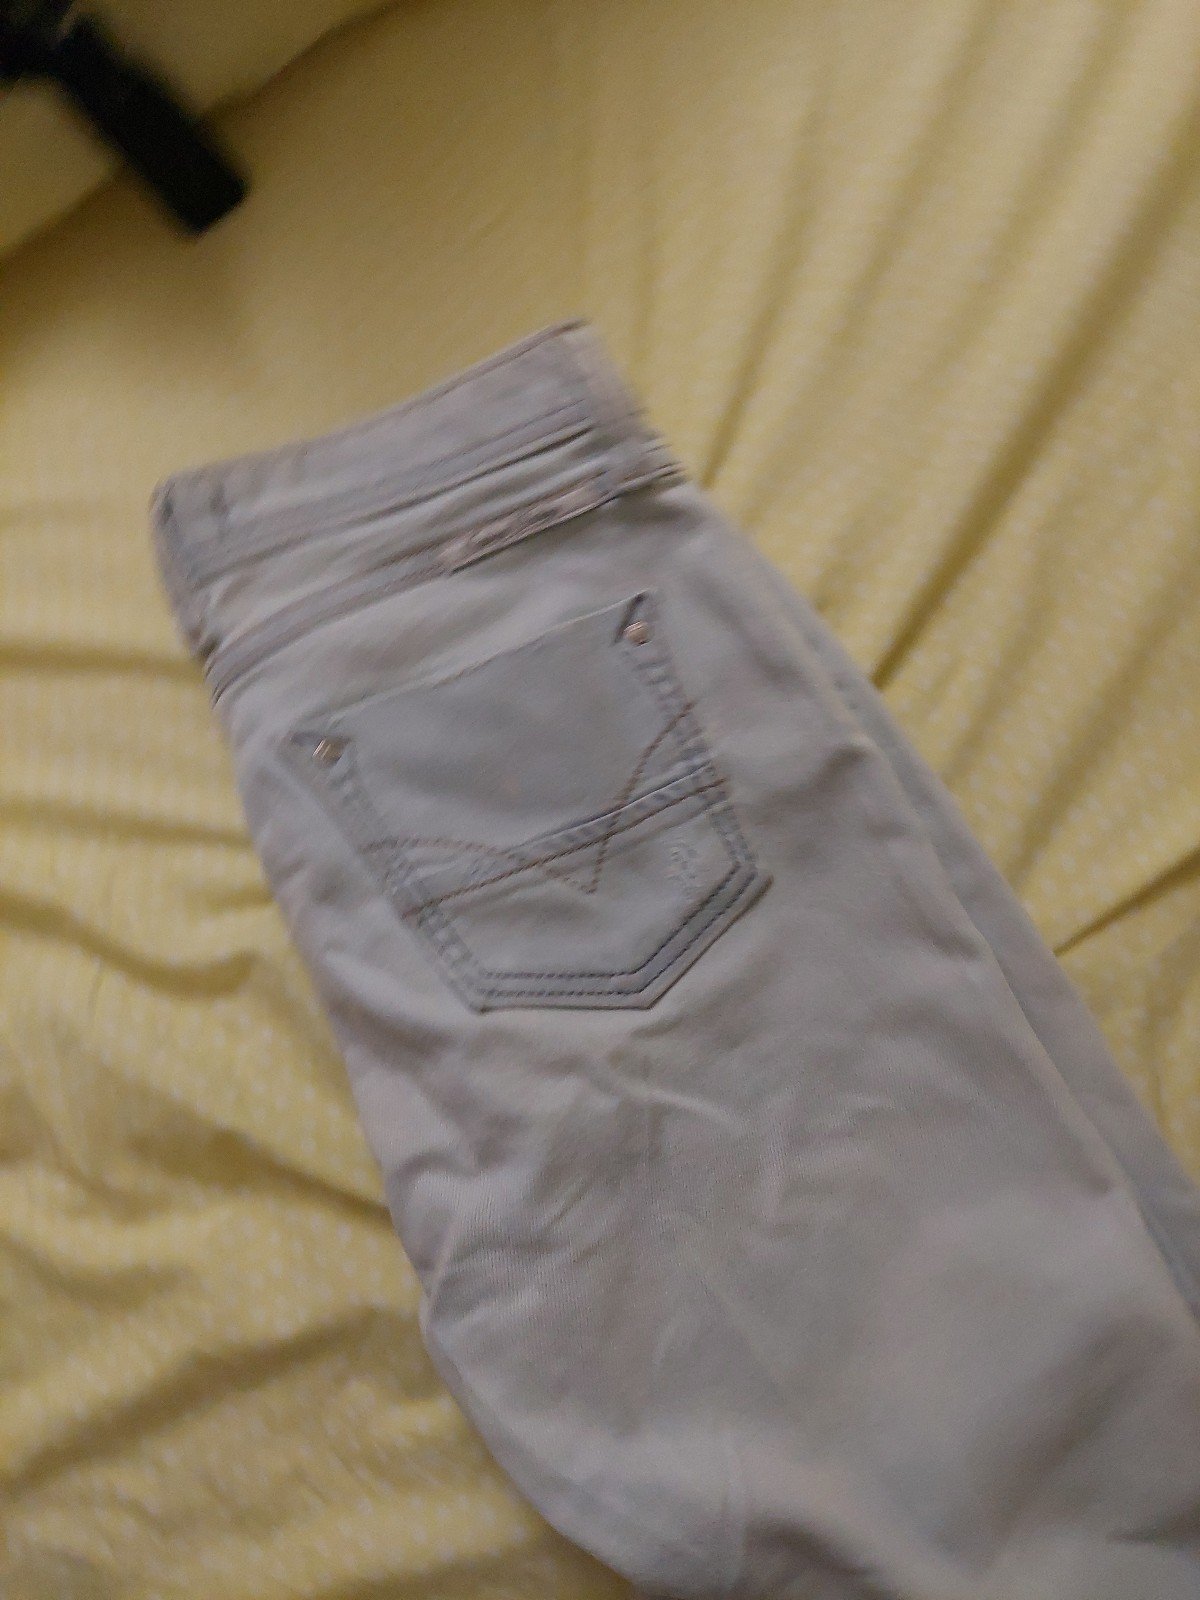 Nice pants skinny jeans osTZ91mbi Factory Price